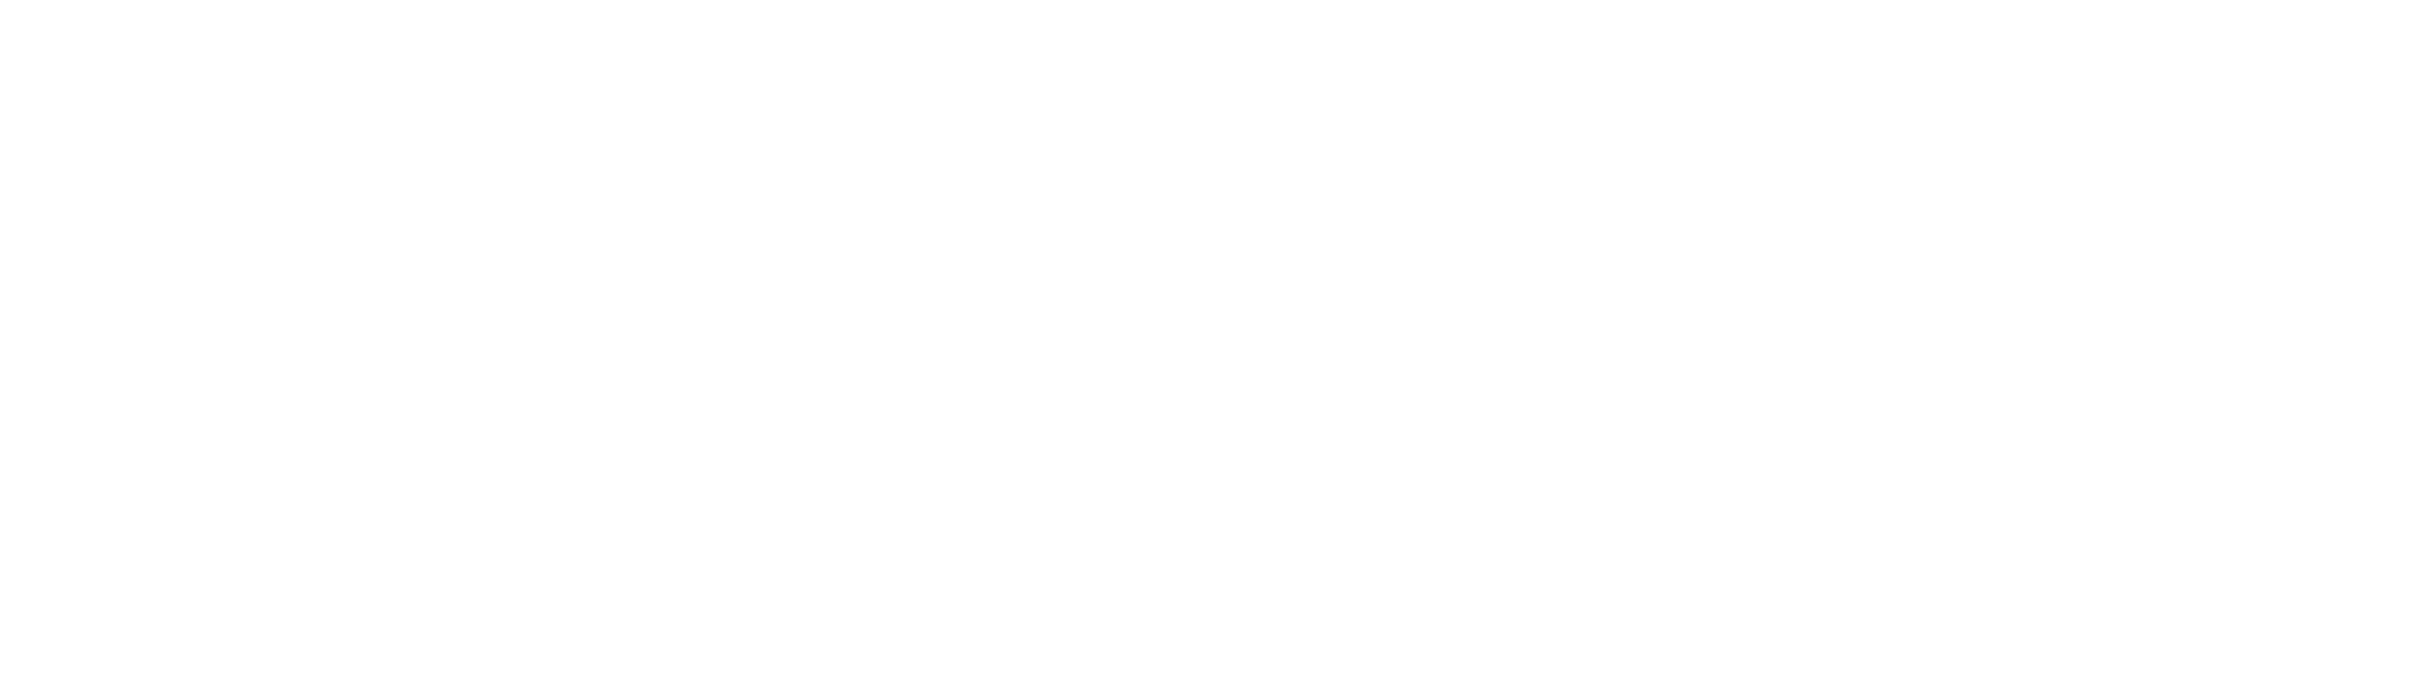 White Wrepit logo